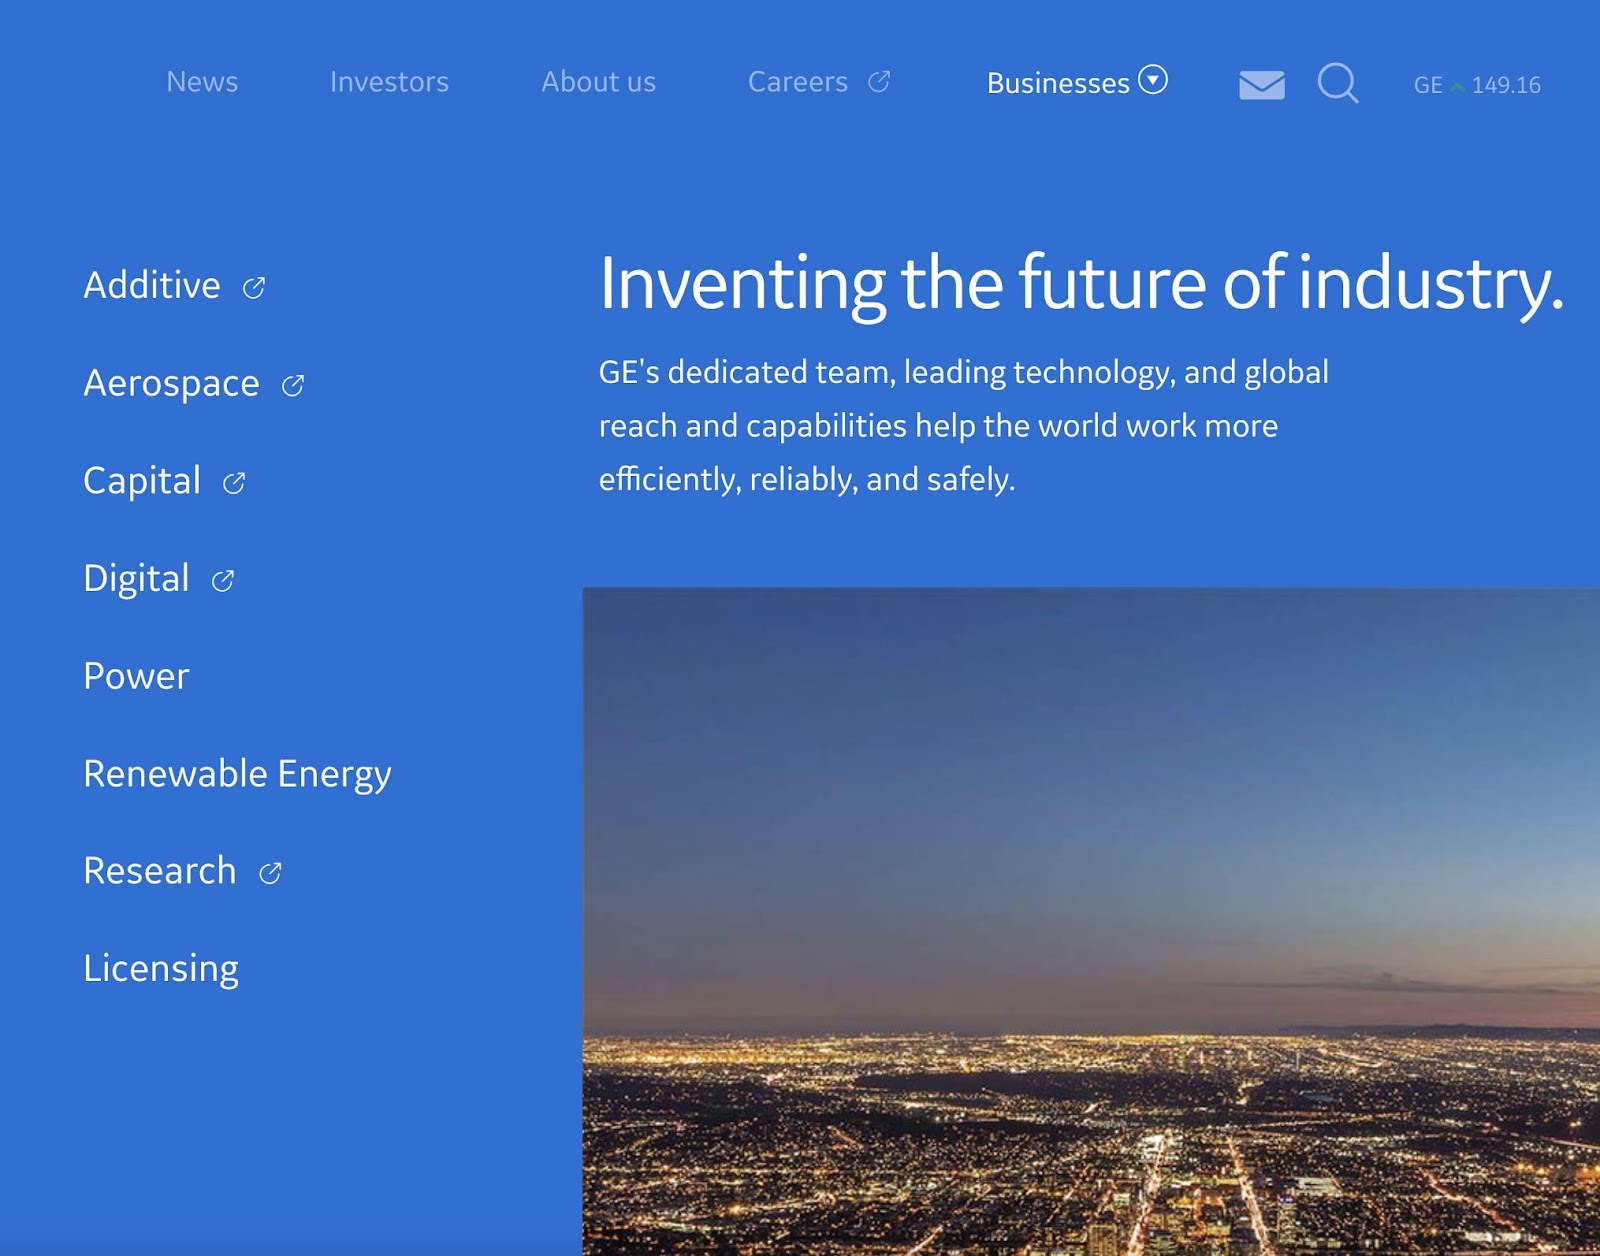 General Electric's website categories